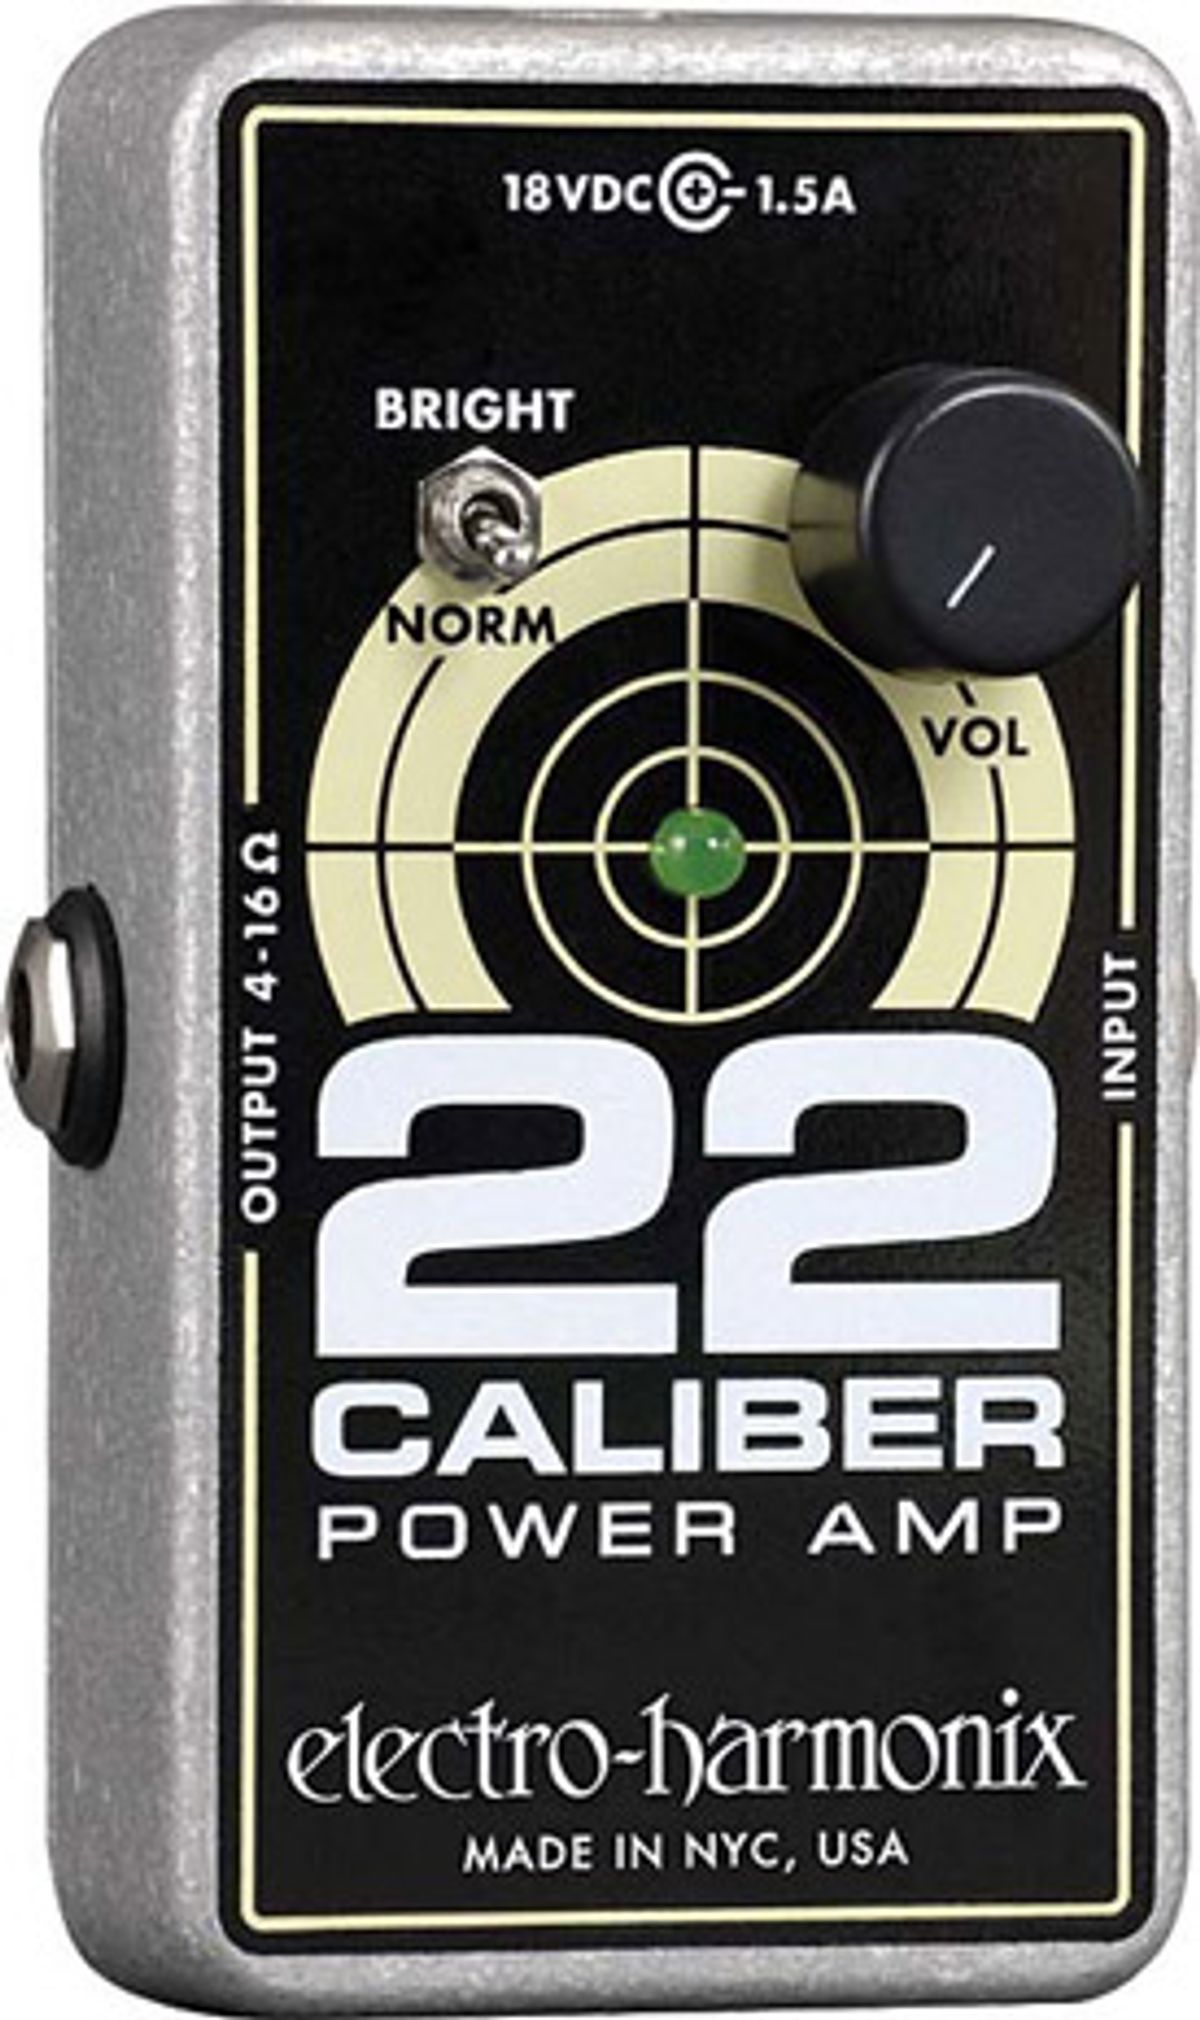 Electro-Harmonix 22 Caliber Power Amp Review